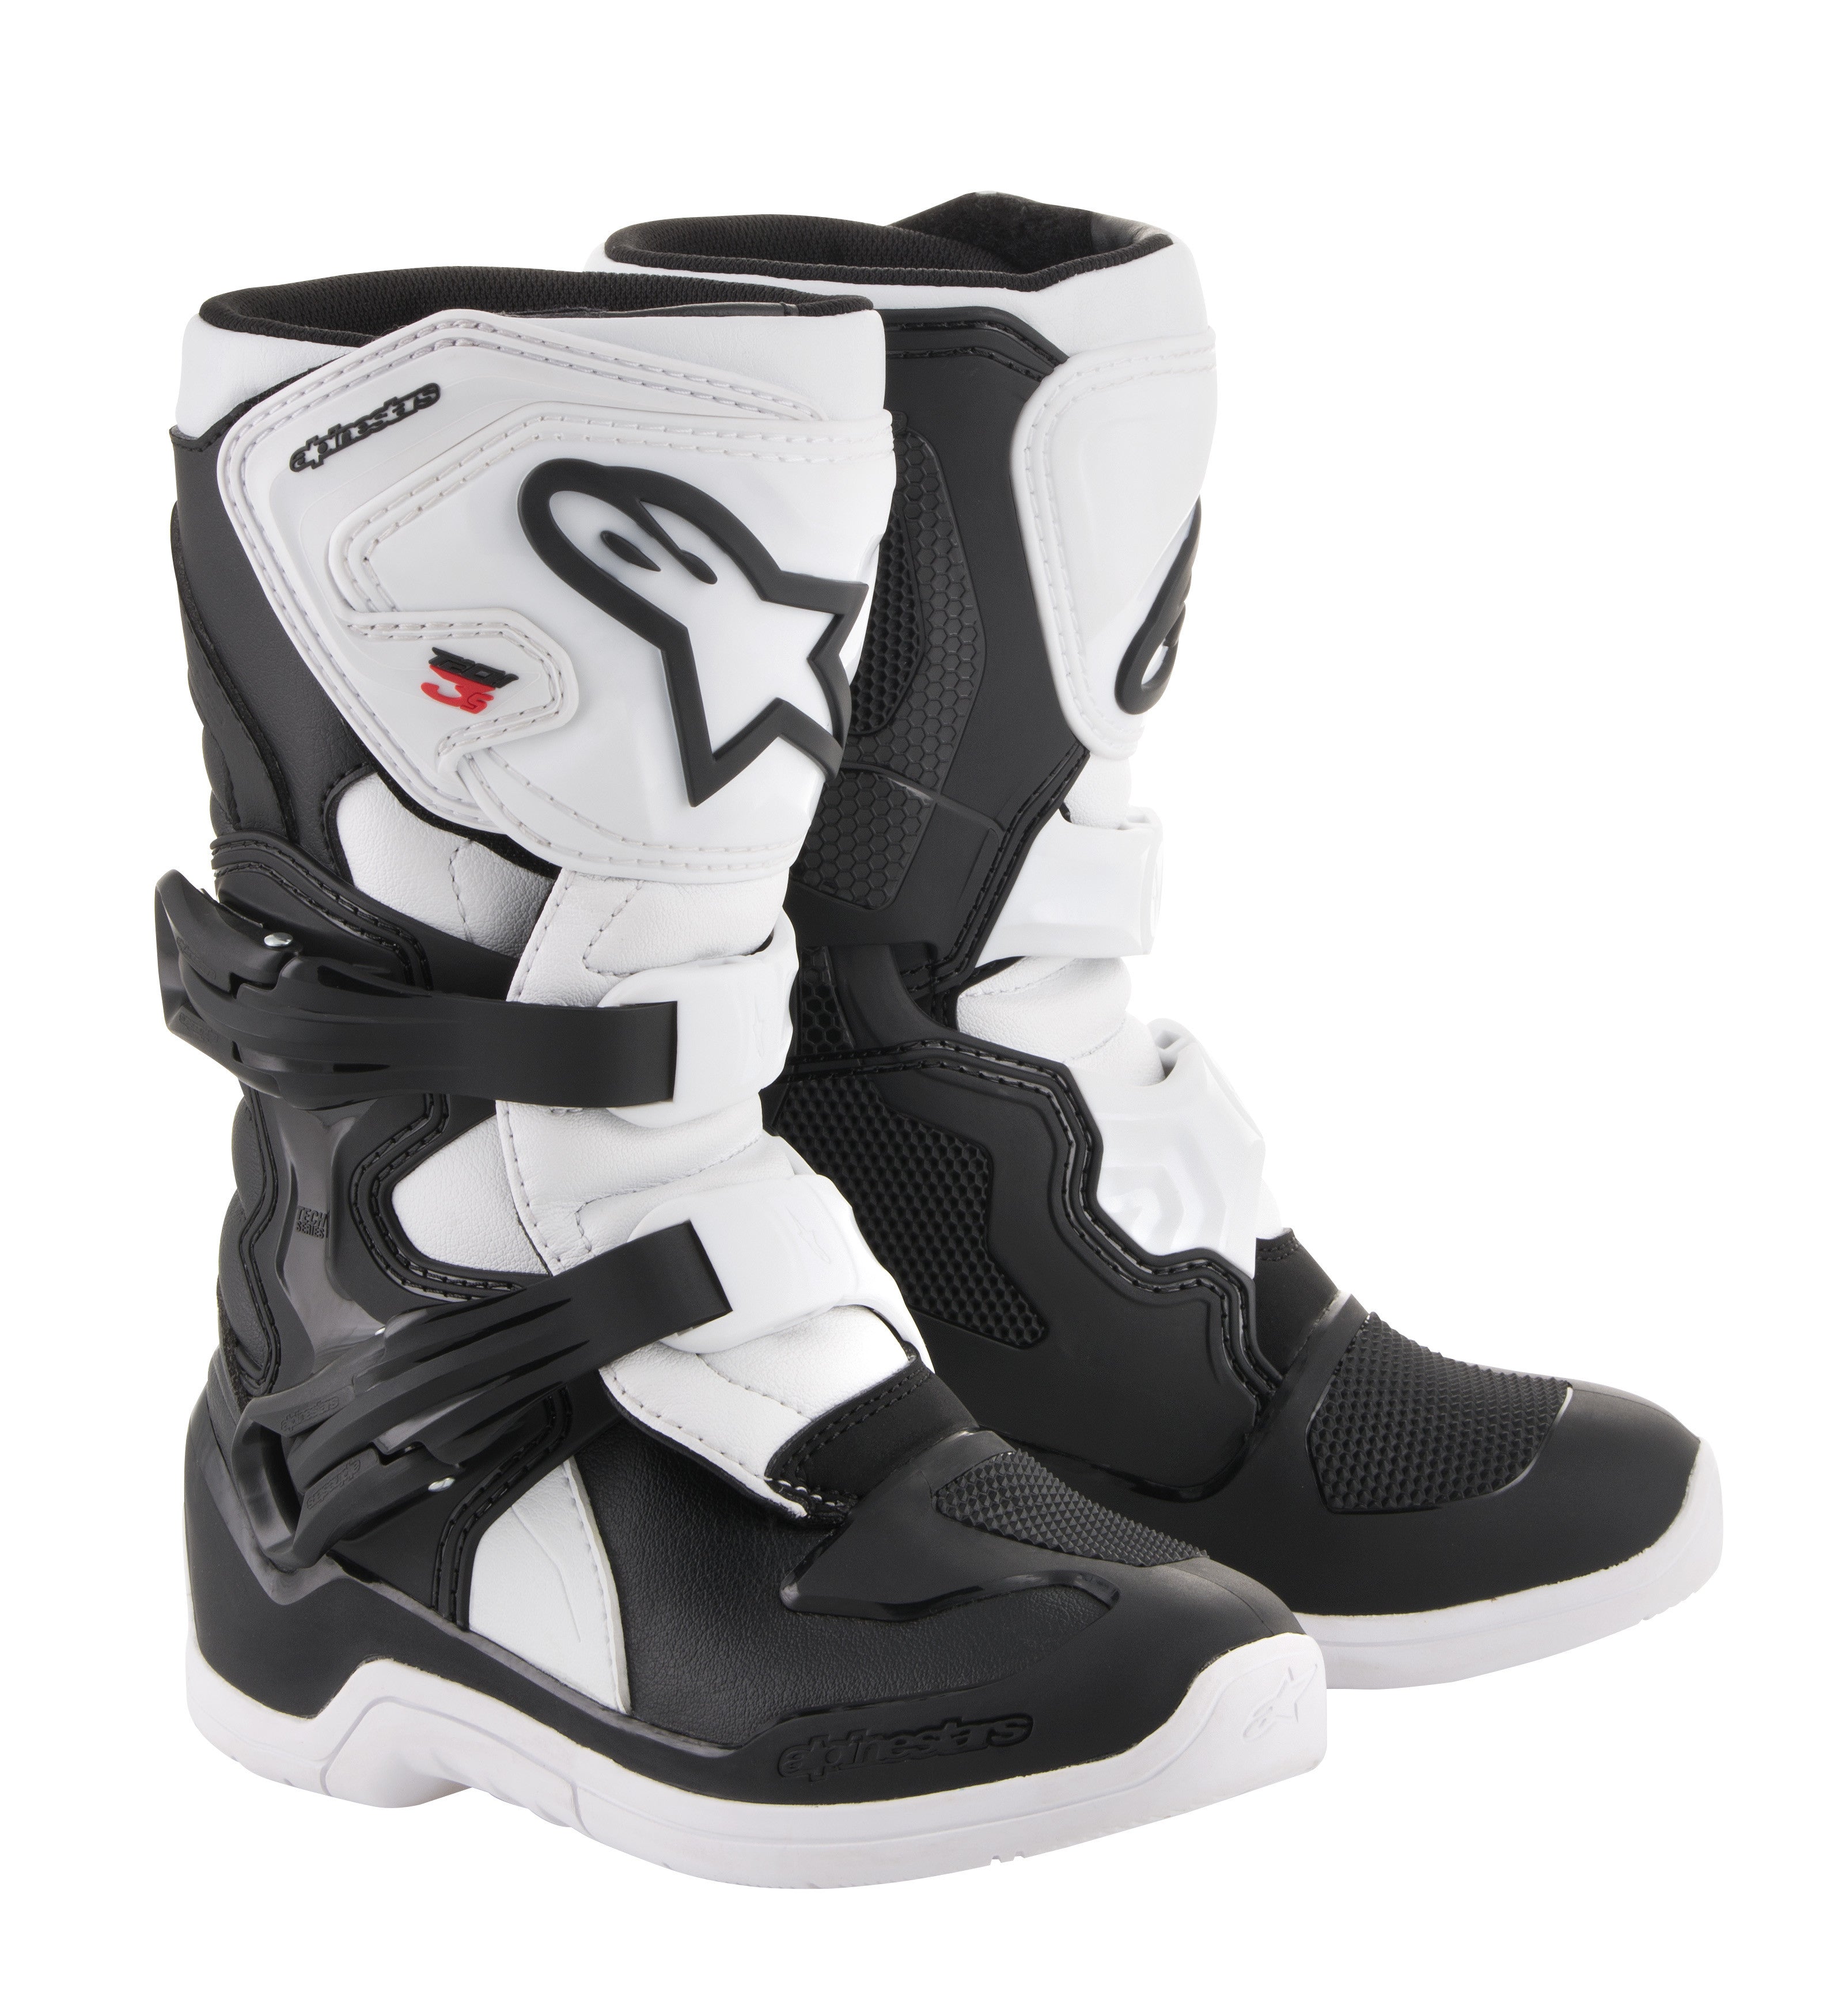 Alpinestars Tech 3S Boots Black/White Youth 13 2014518-12-13